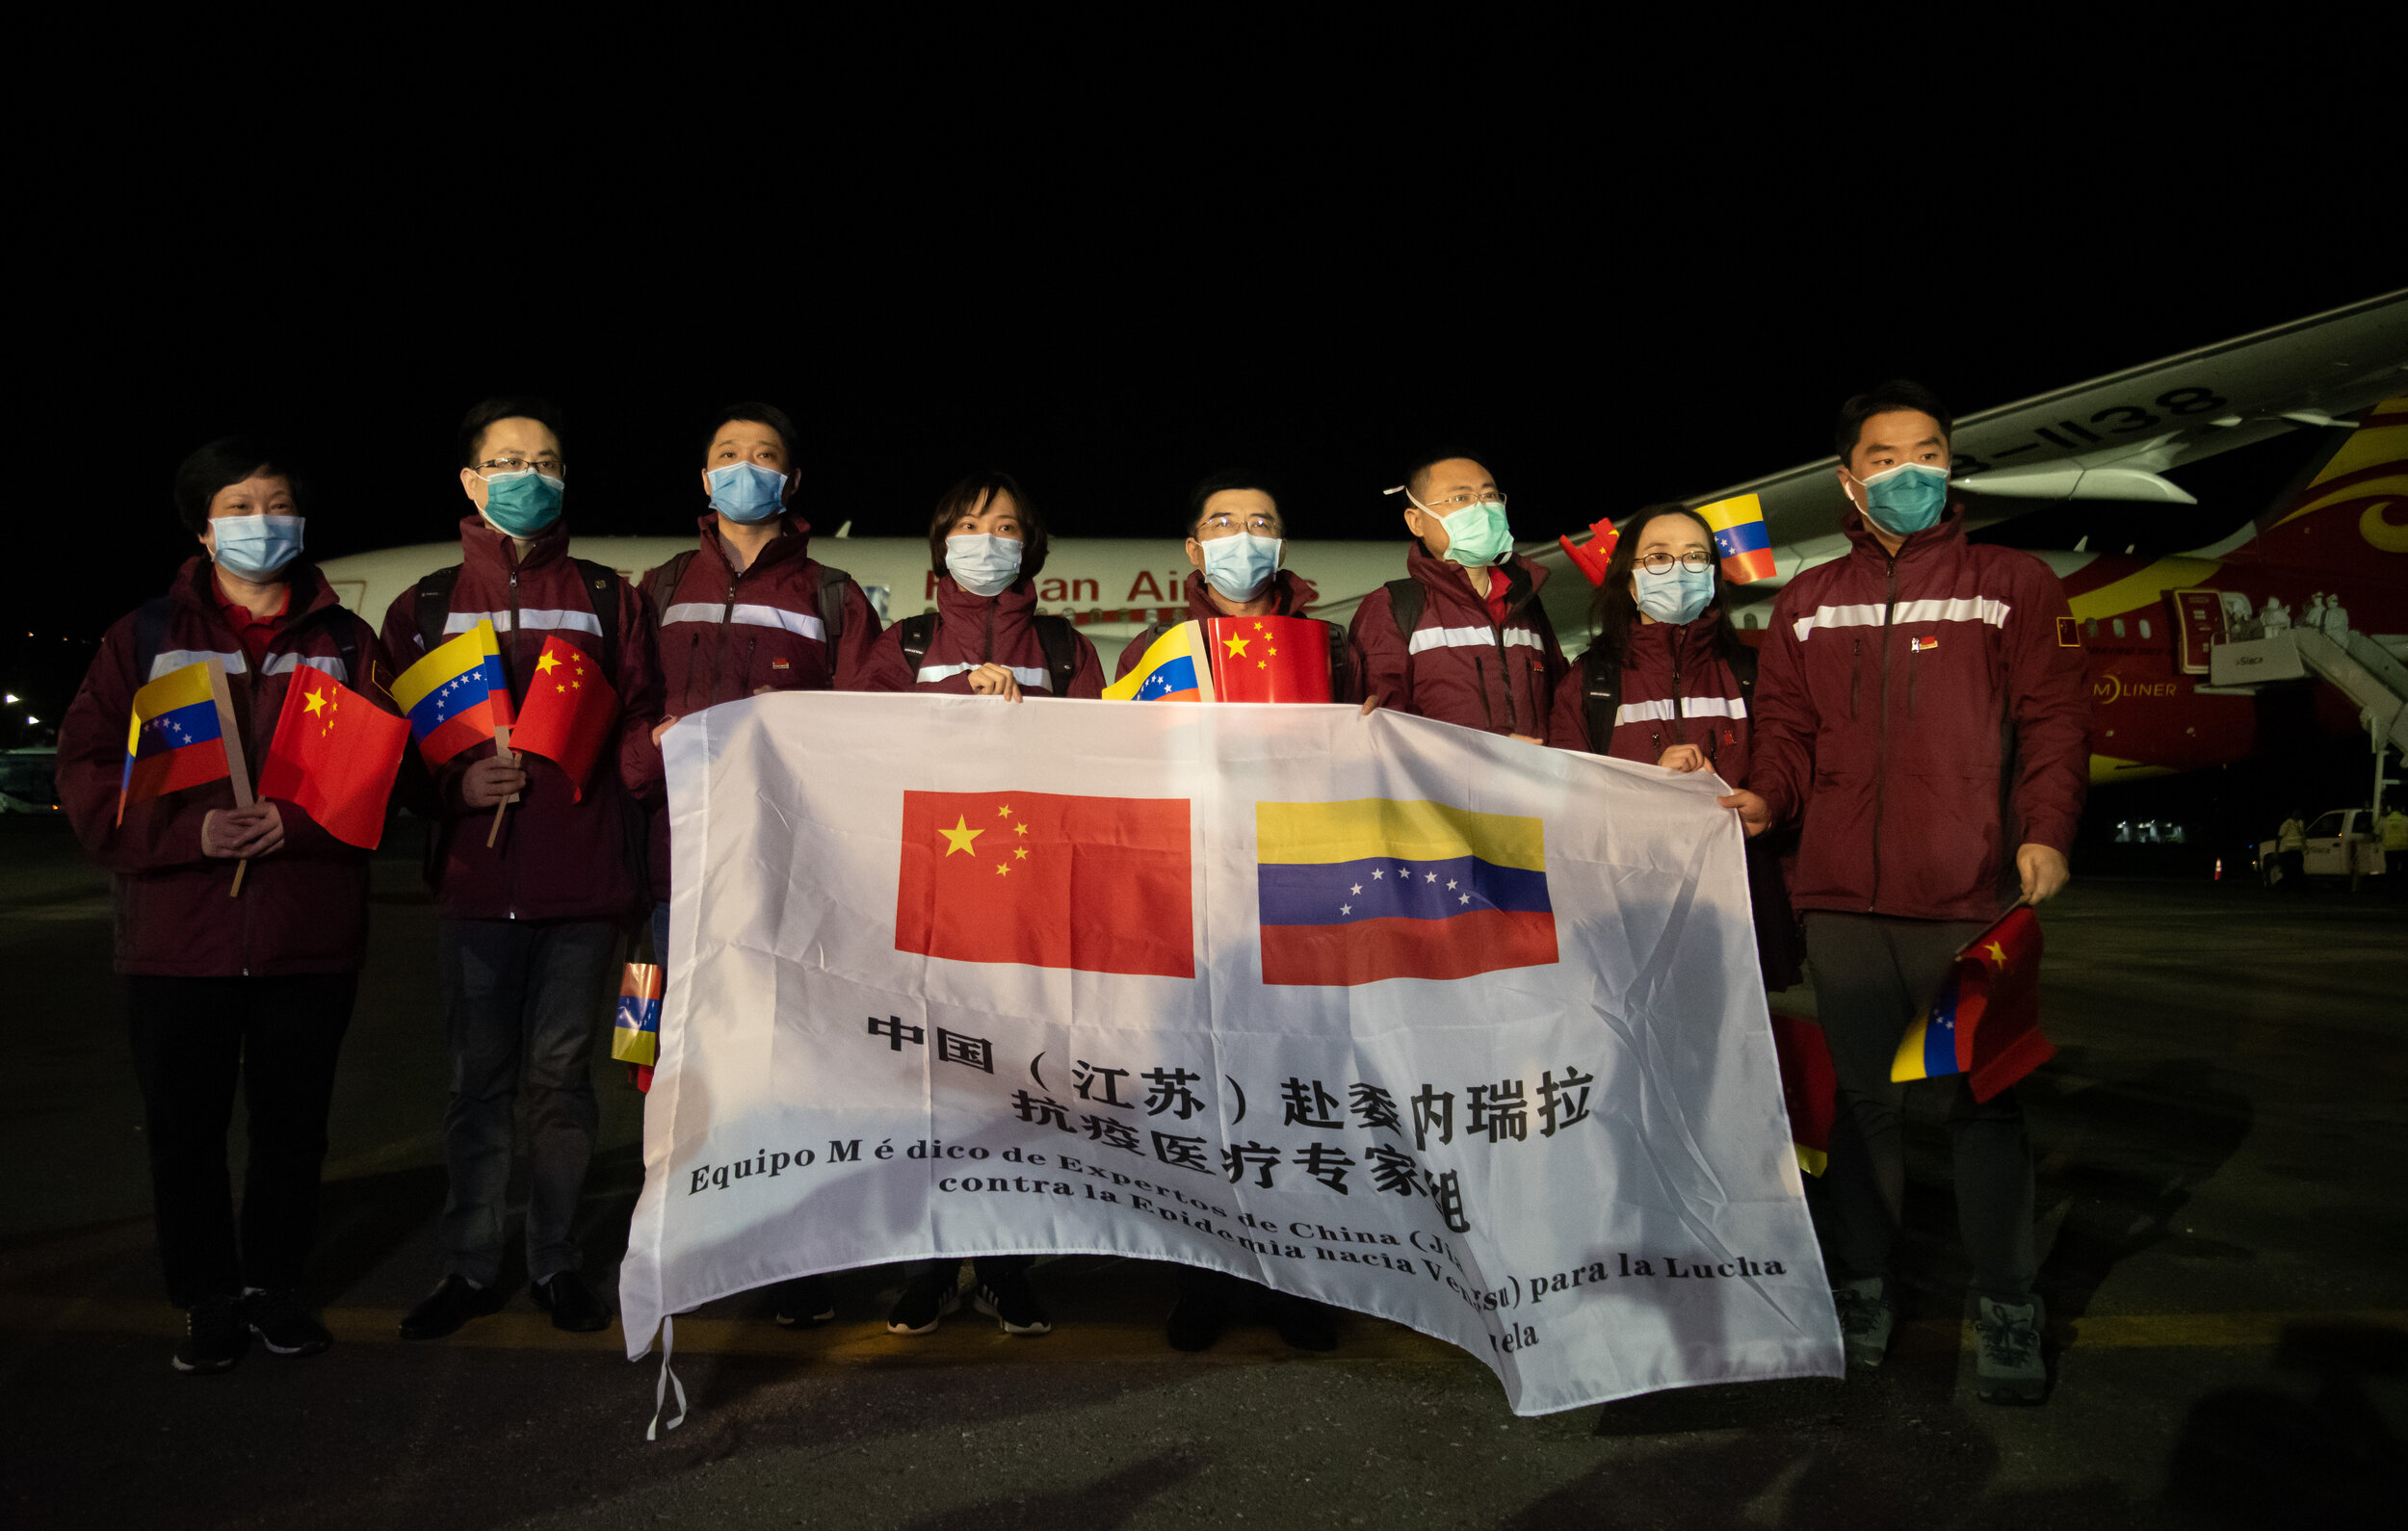 Chinese medical experts pose at the Simon Bolivar International Airport, in La Guaira, Venezuela, on March 30, 2020. (Source: Xinhua/Marcos Salgado)